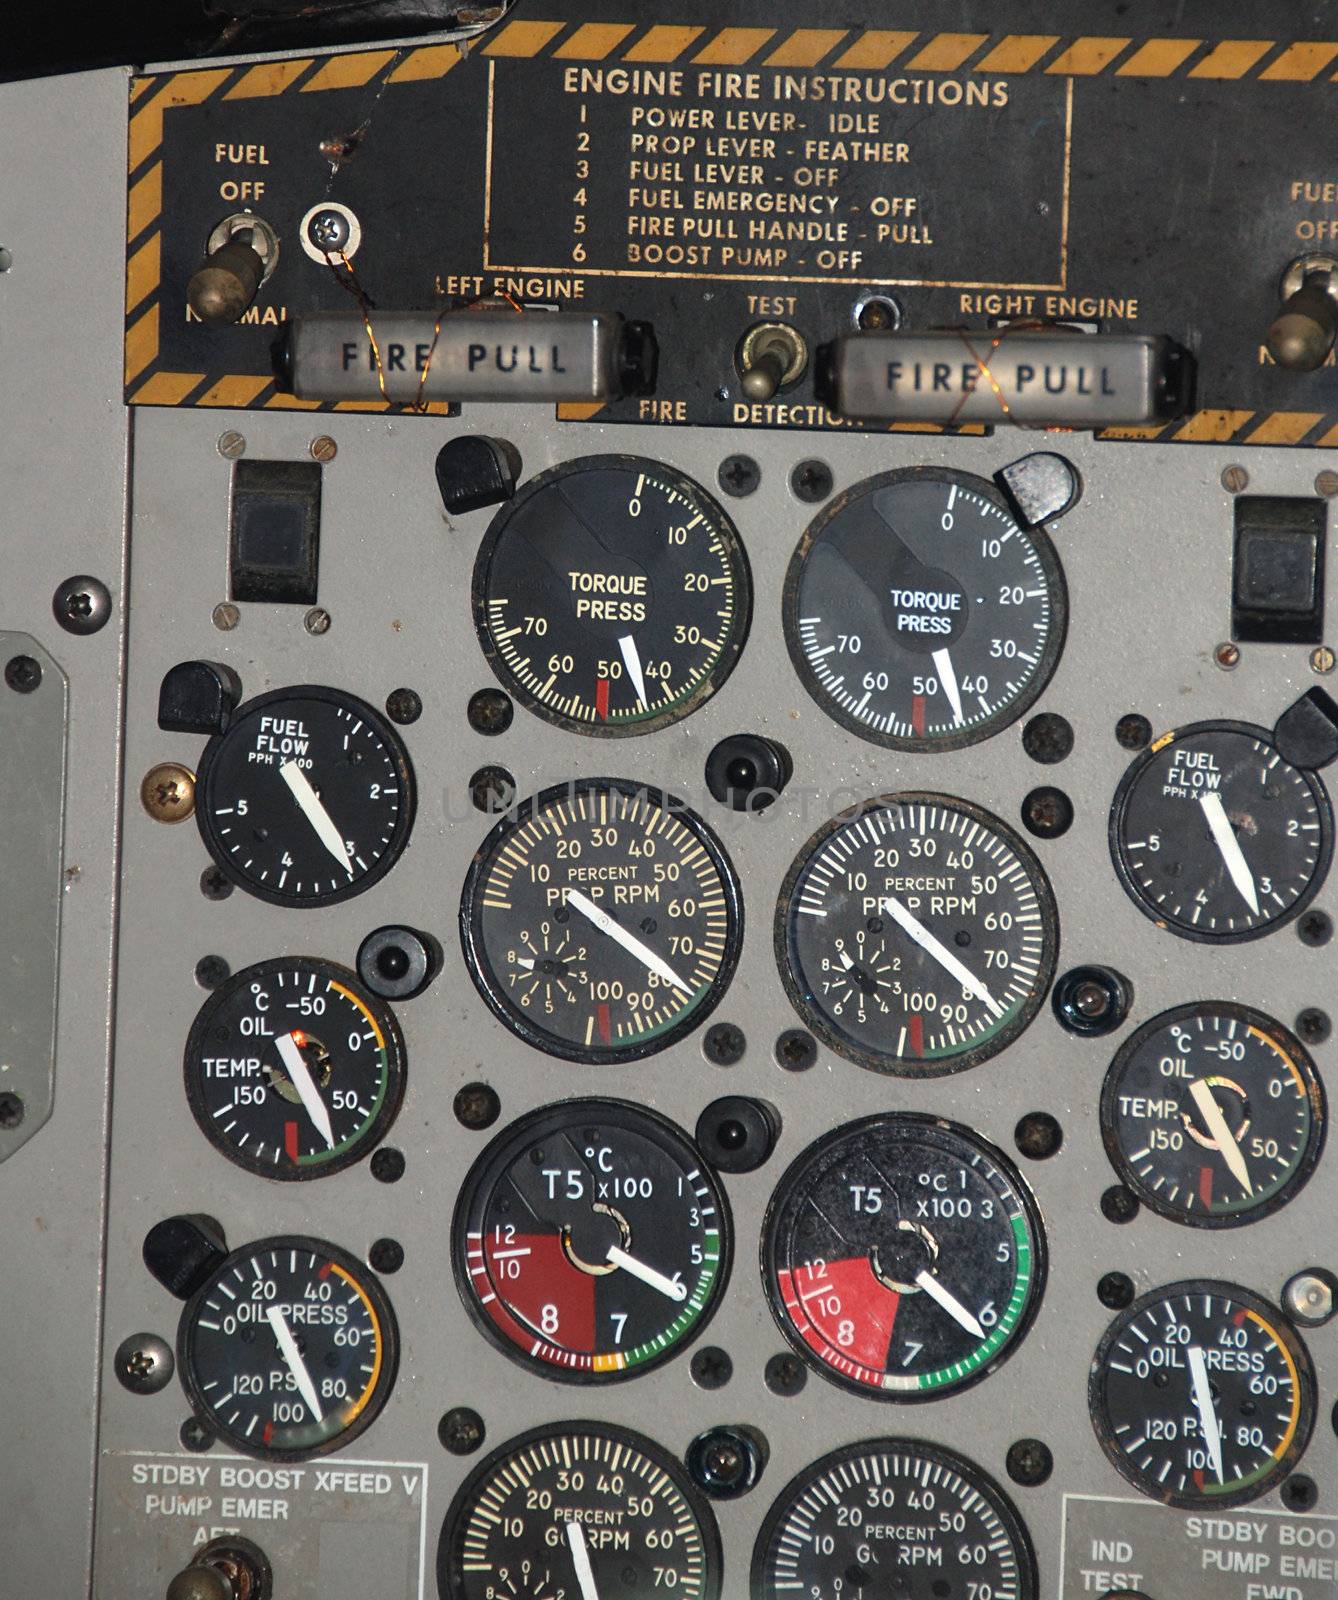 Airplaine cockpit by fyletto